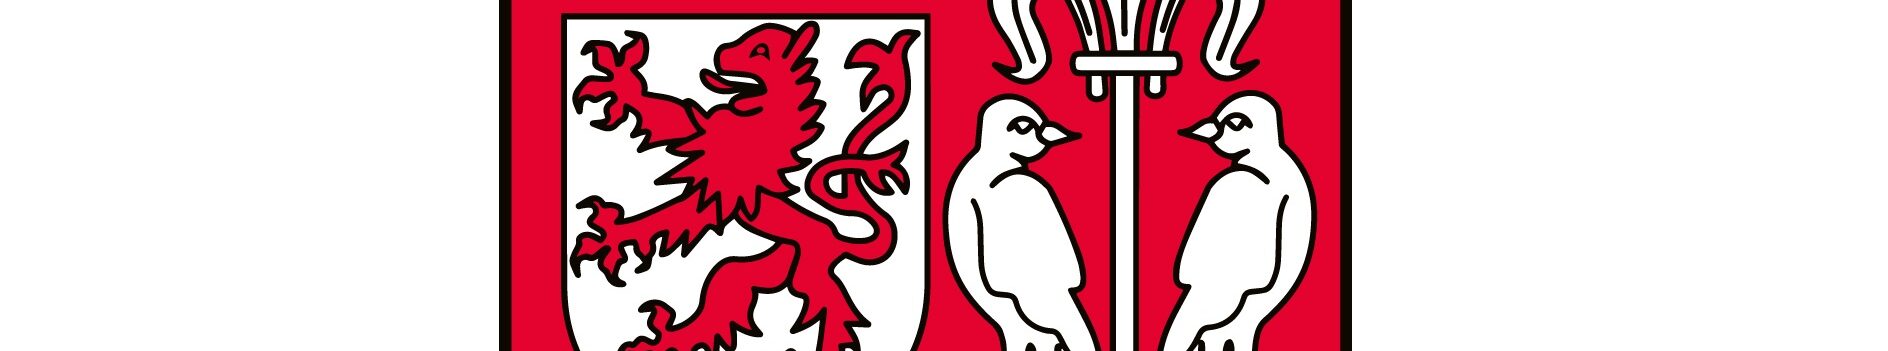 Wappen der Stadt Wesseling